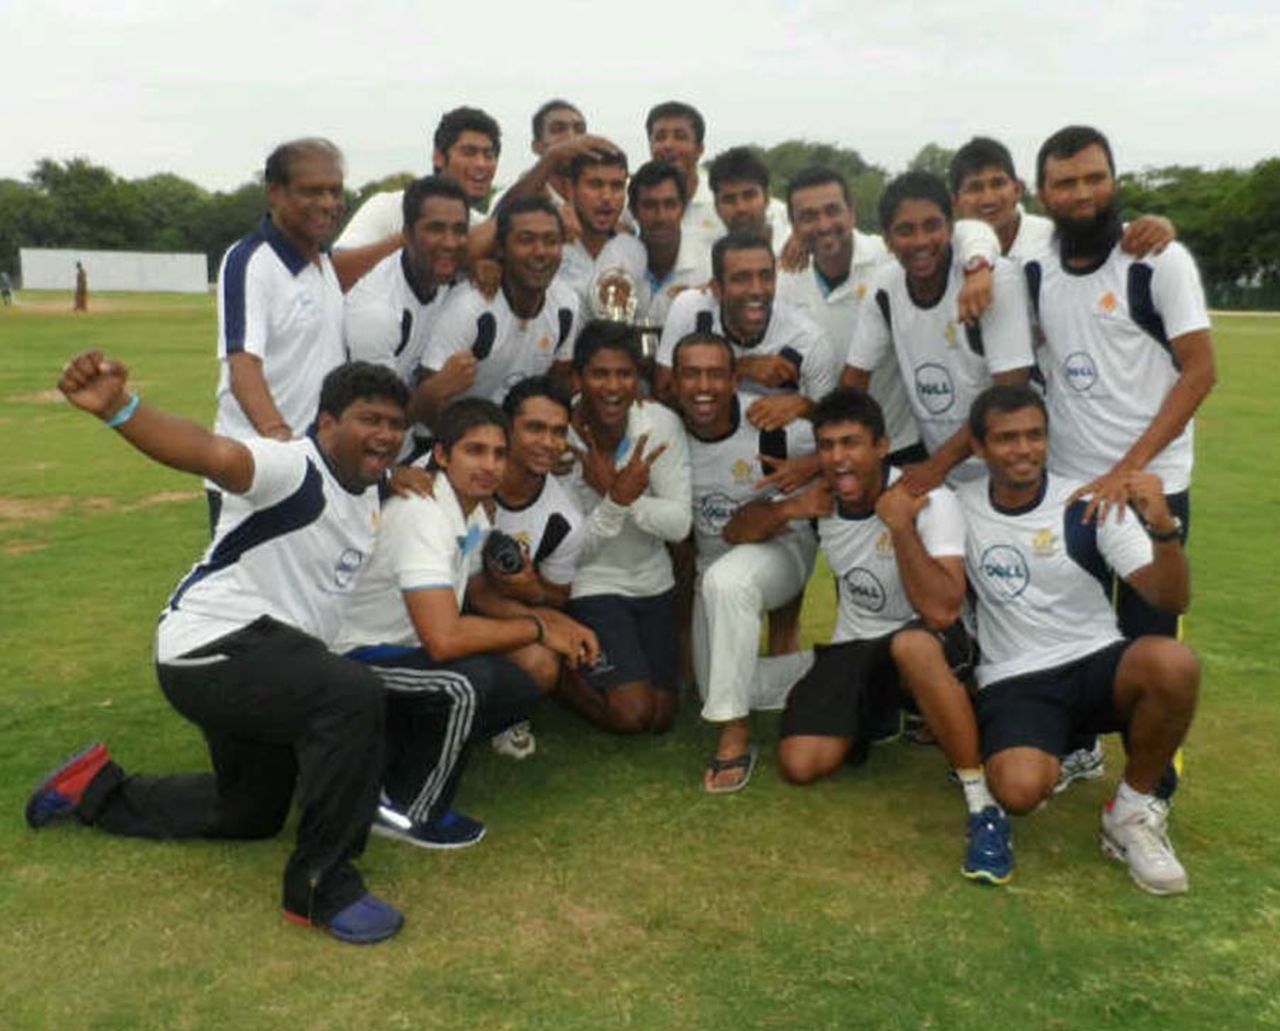 The Karnataka team after winning the Buchi Babu tournament, Chennai, September 3, 2012